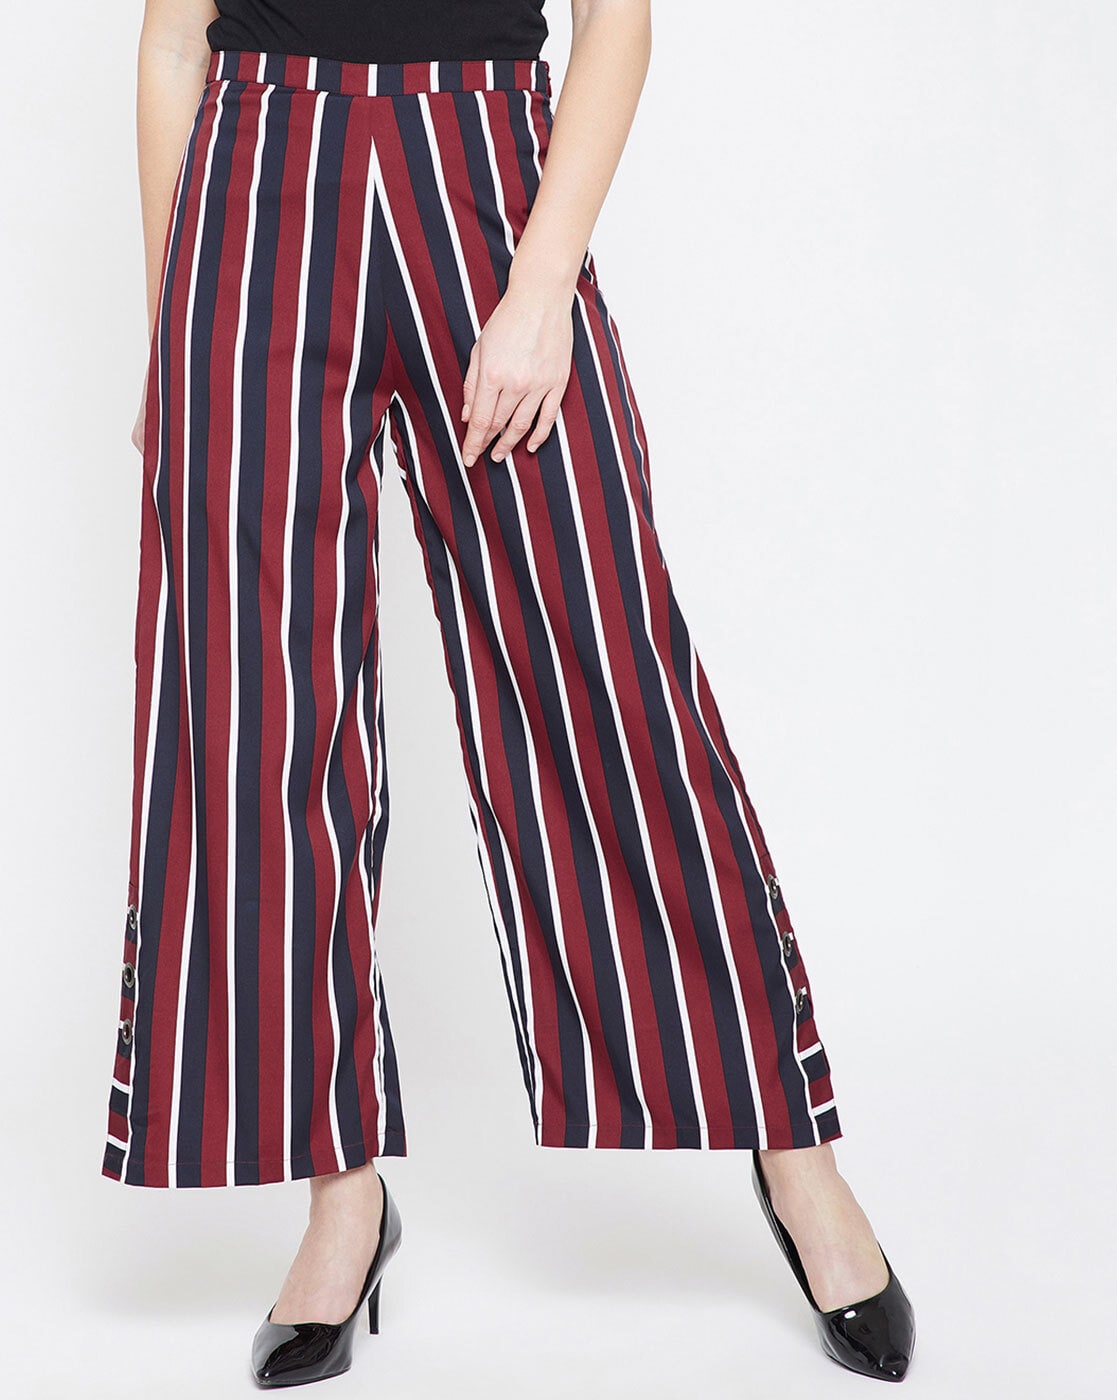 maroon striped pants